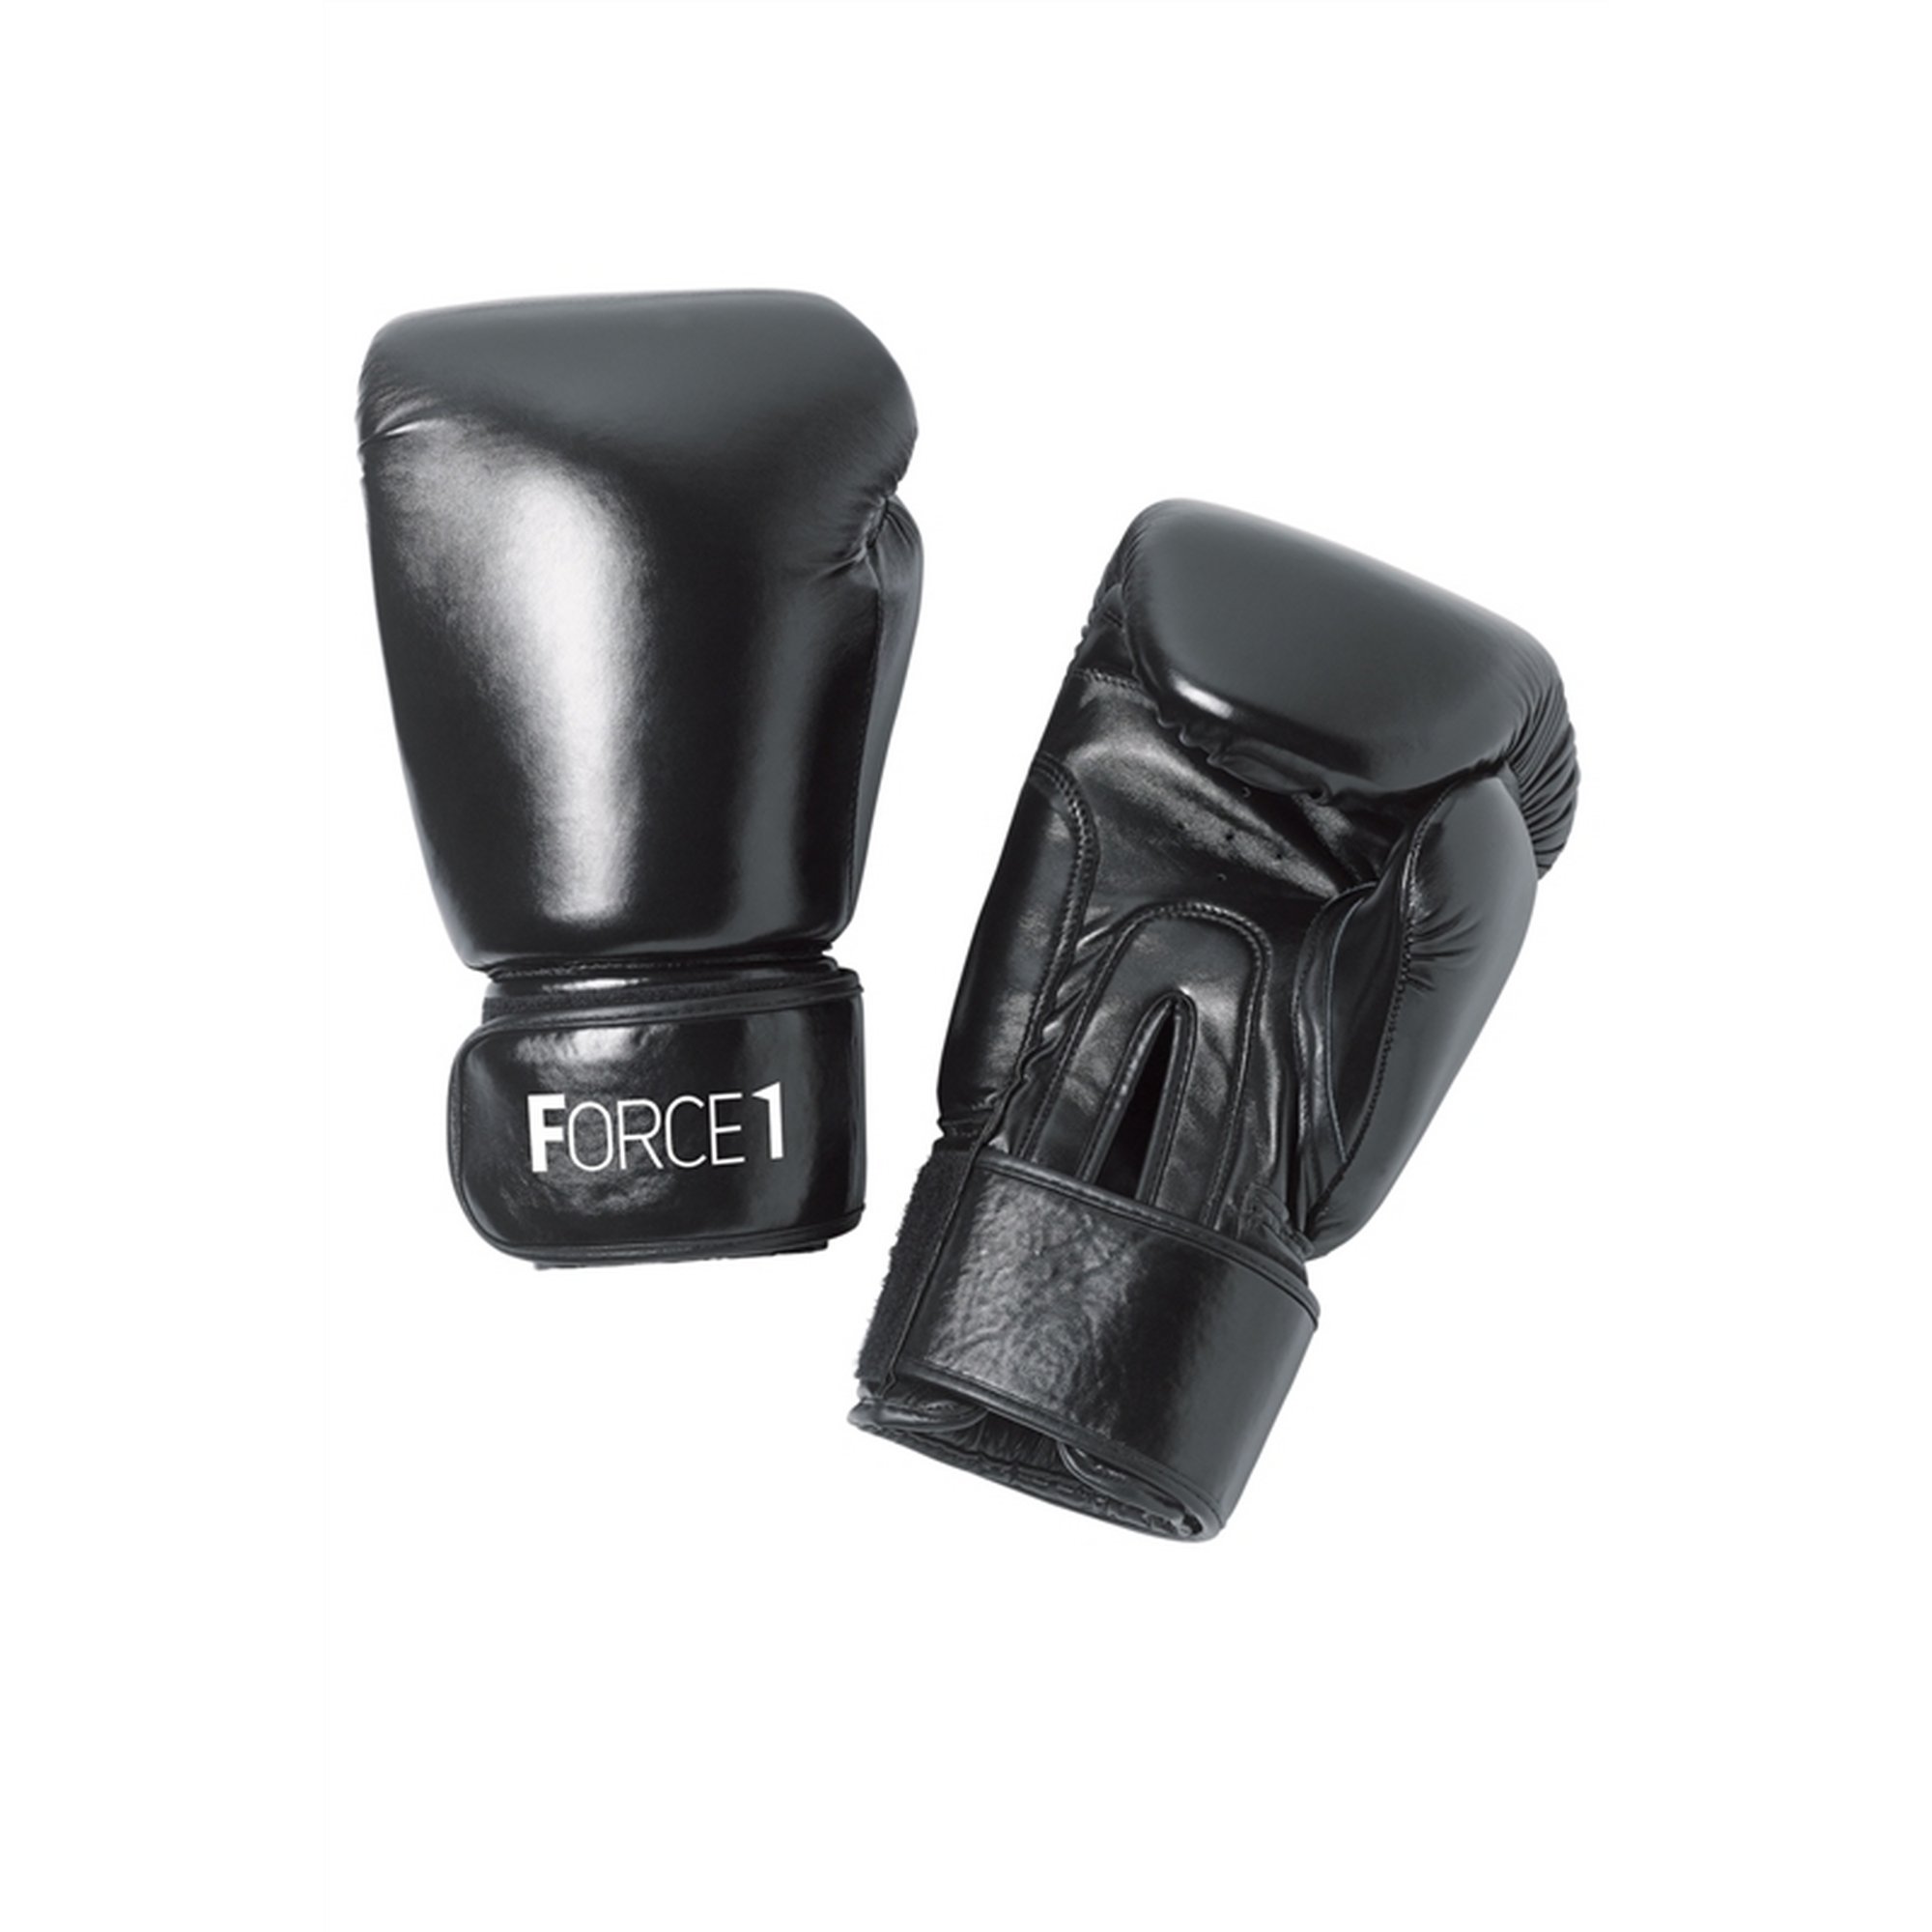 Image of Force 1 Boxing Bag Gloves